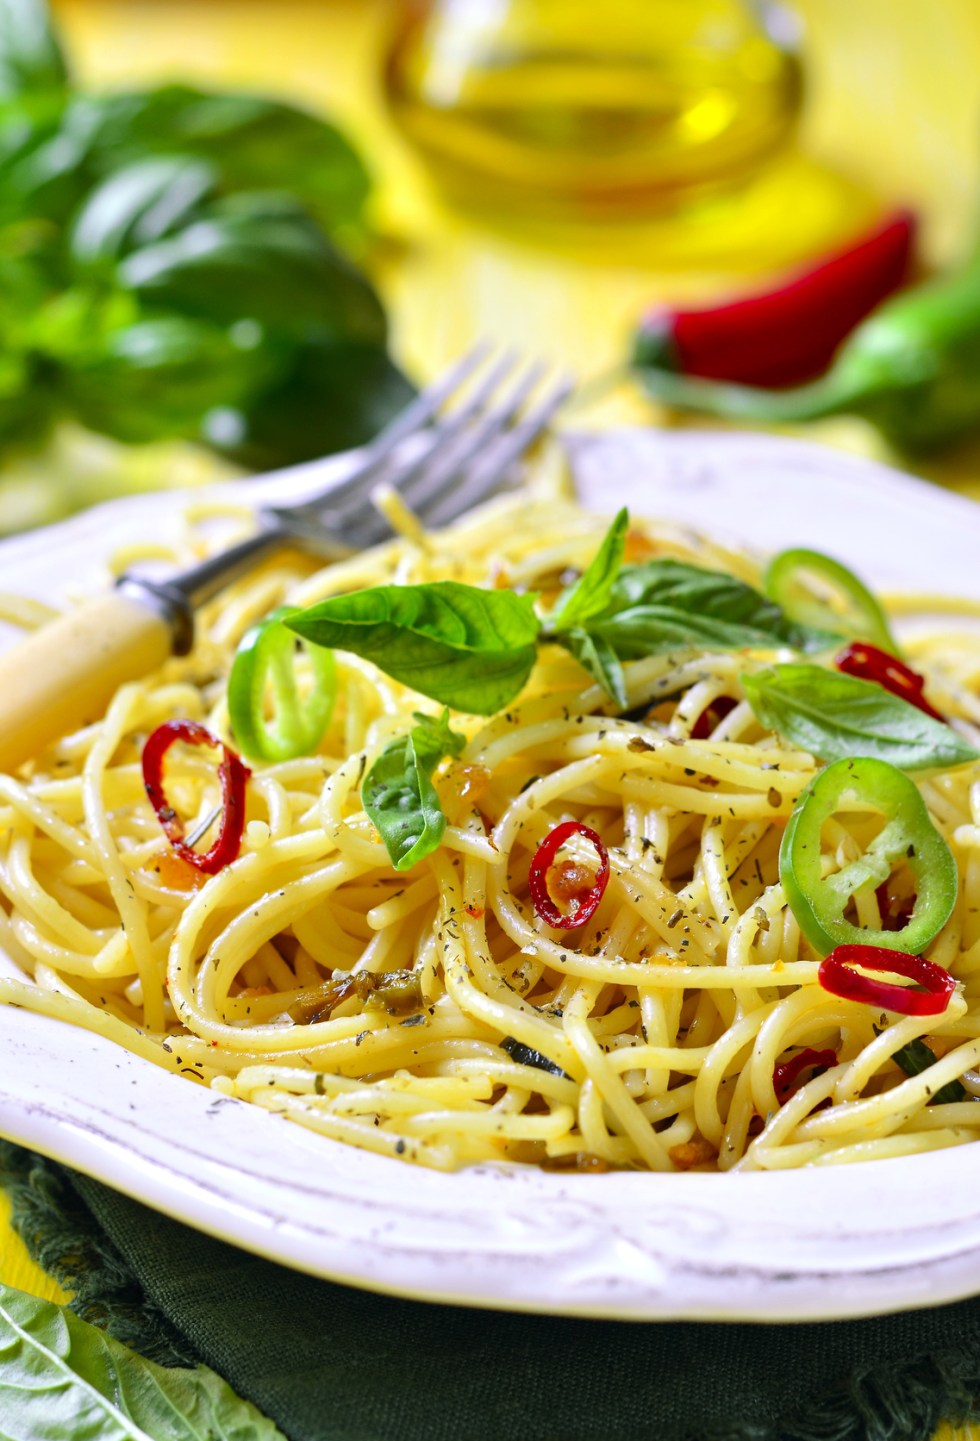 Spaghetti with chili,garlic and basil.